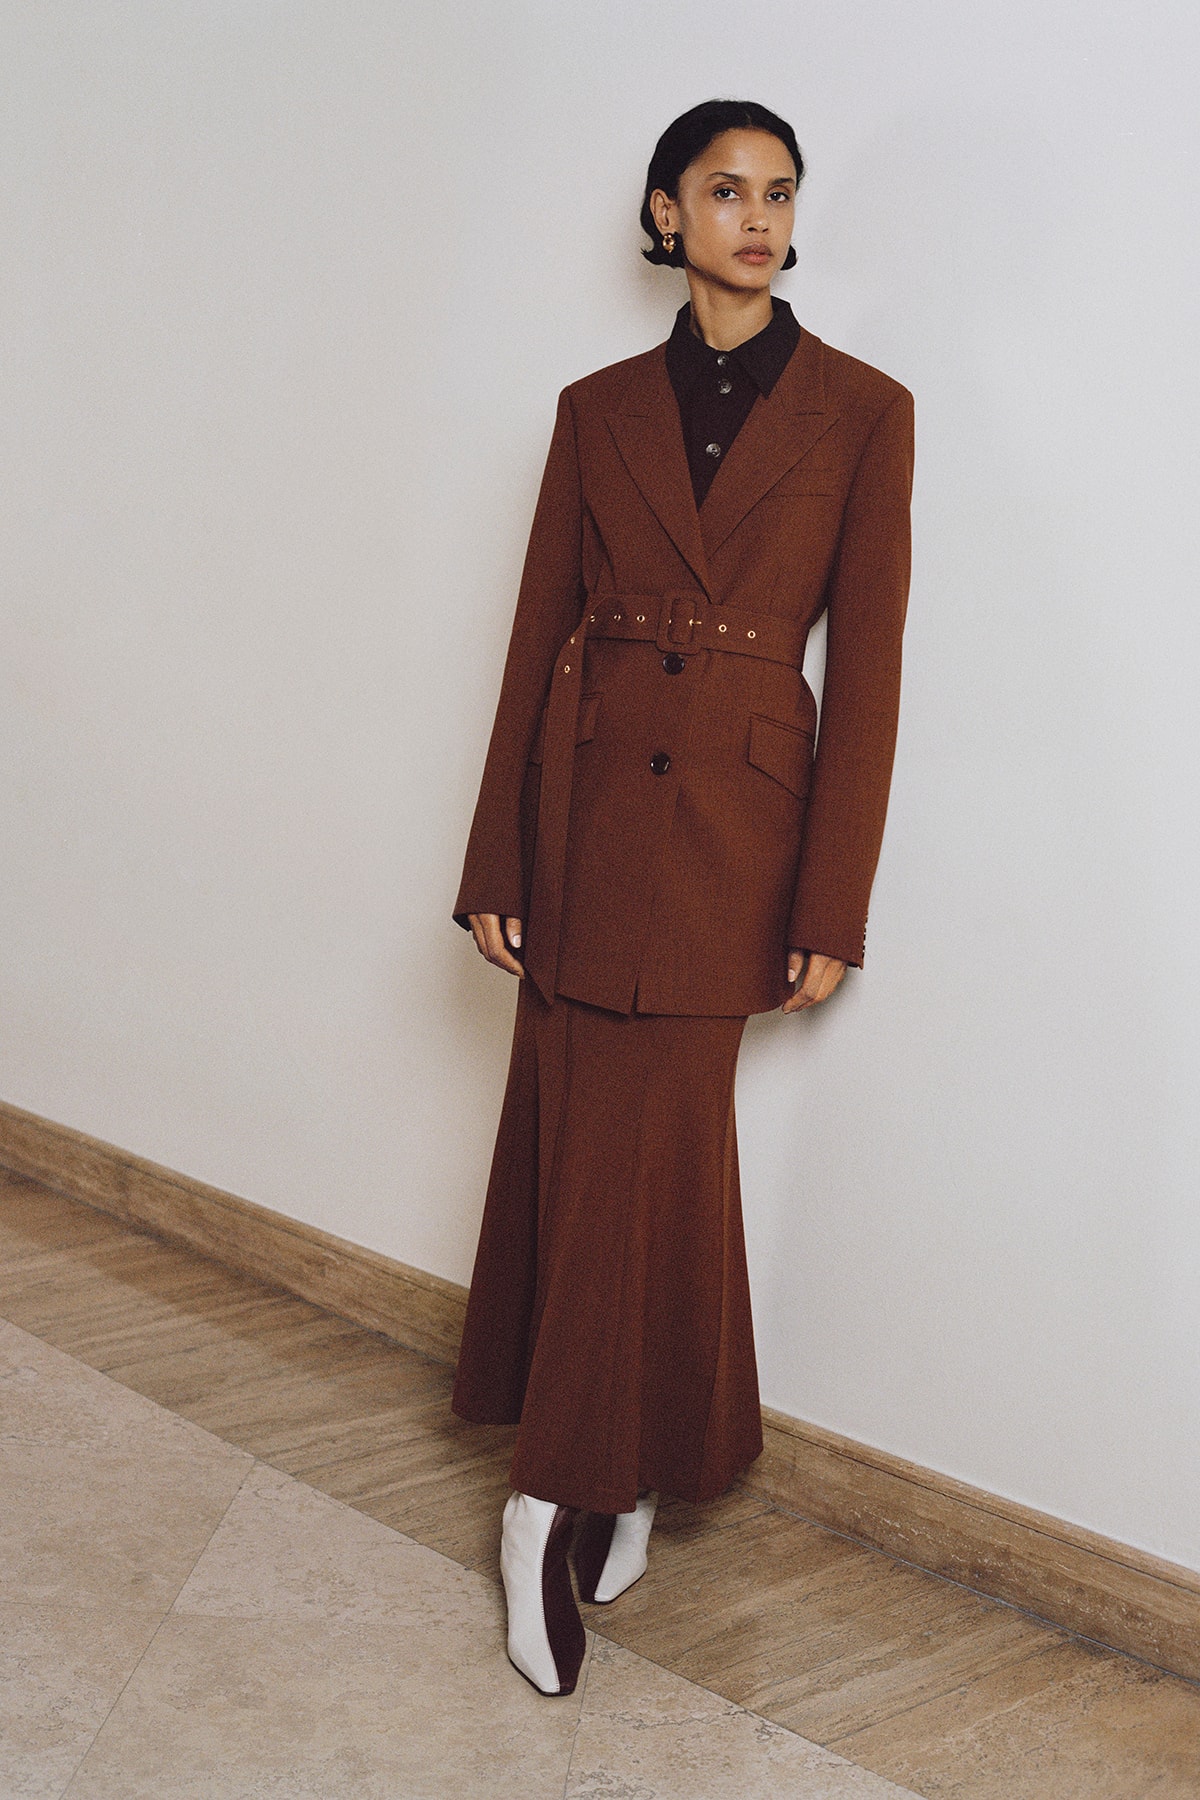 Nanushka Fall/Winter Collection Lookbook Blazer Skirt Brown